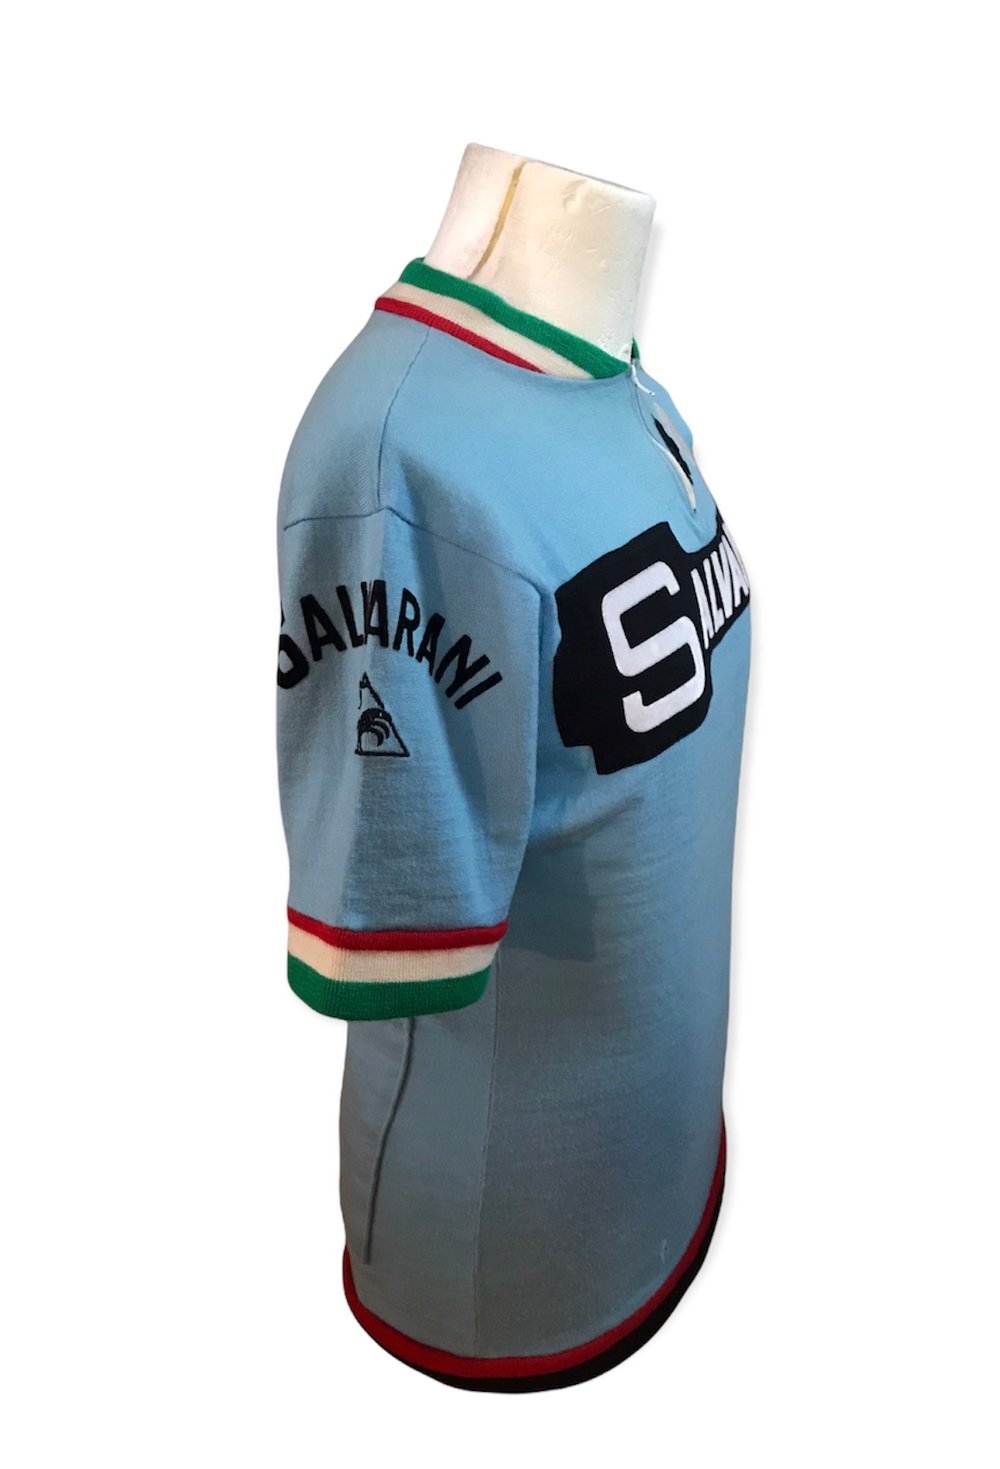  1970 ðŸ‡®ðŸ‡¹ Salvarani - Tour de France - Used pro team jersey